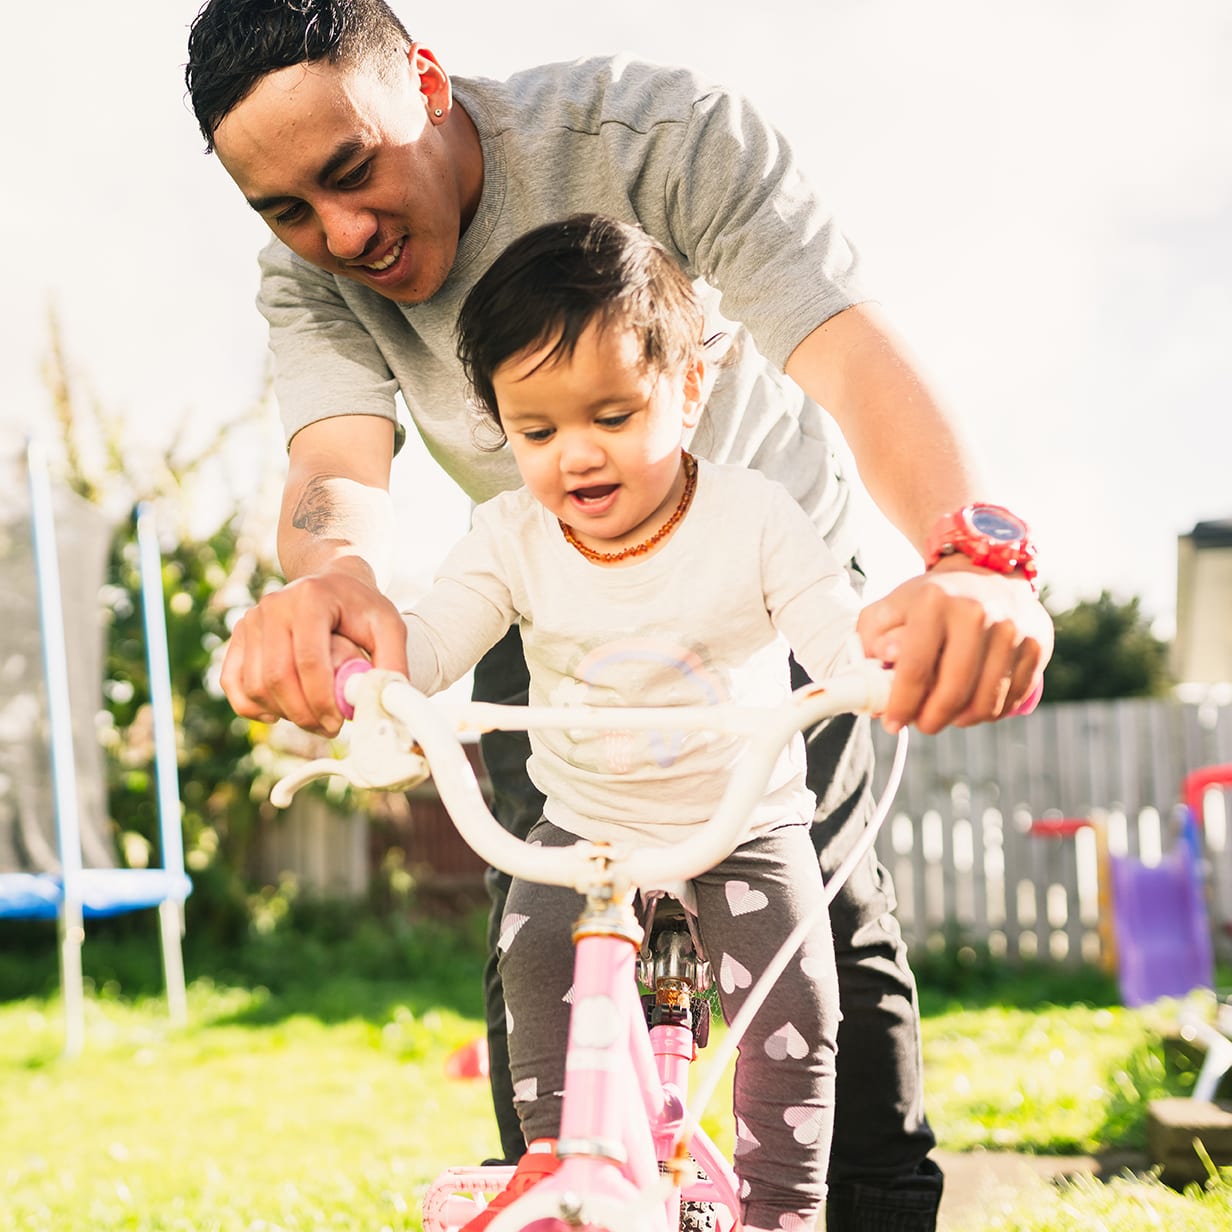 Maori father helping her daughter to ride bicycle in backyard.